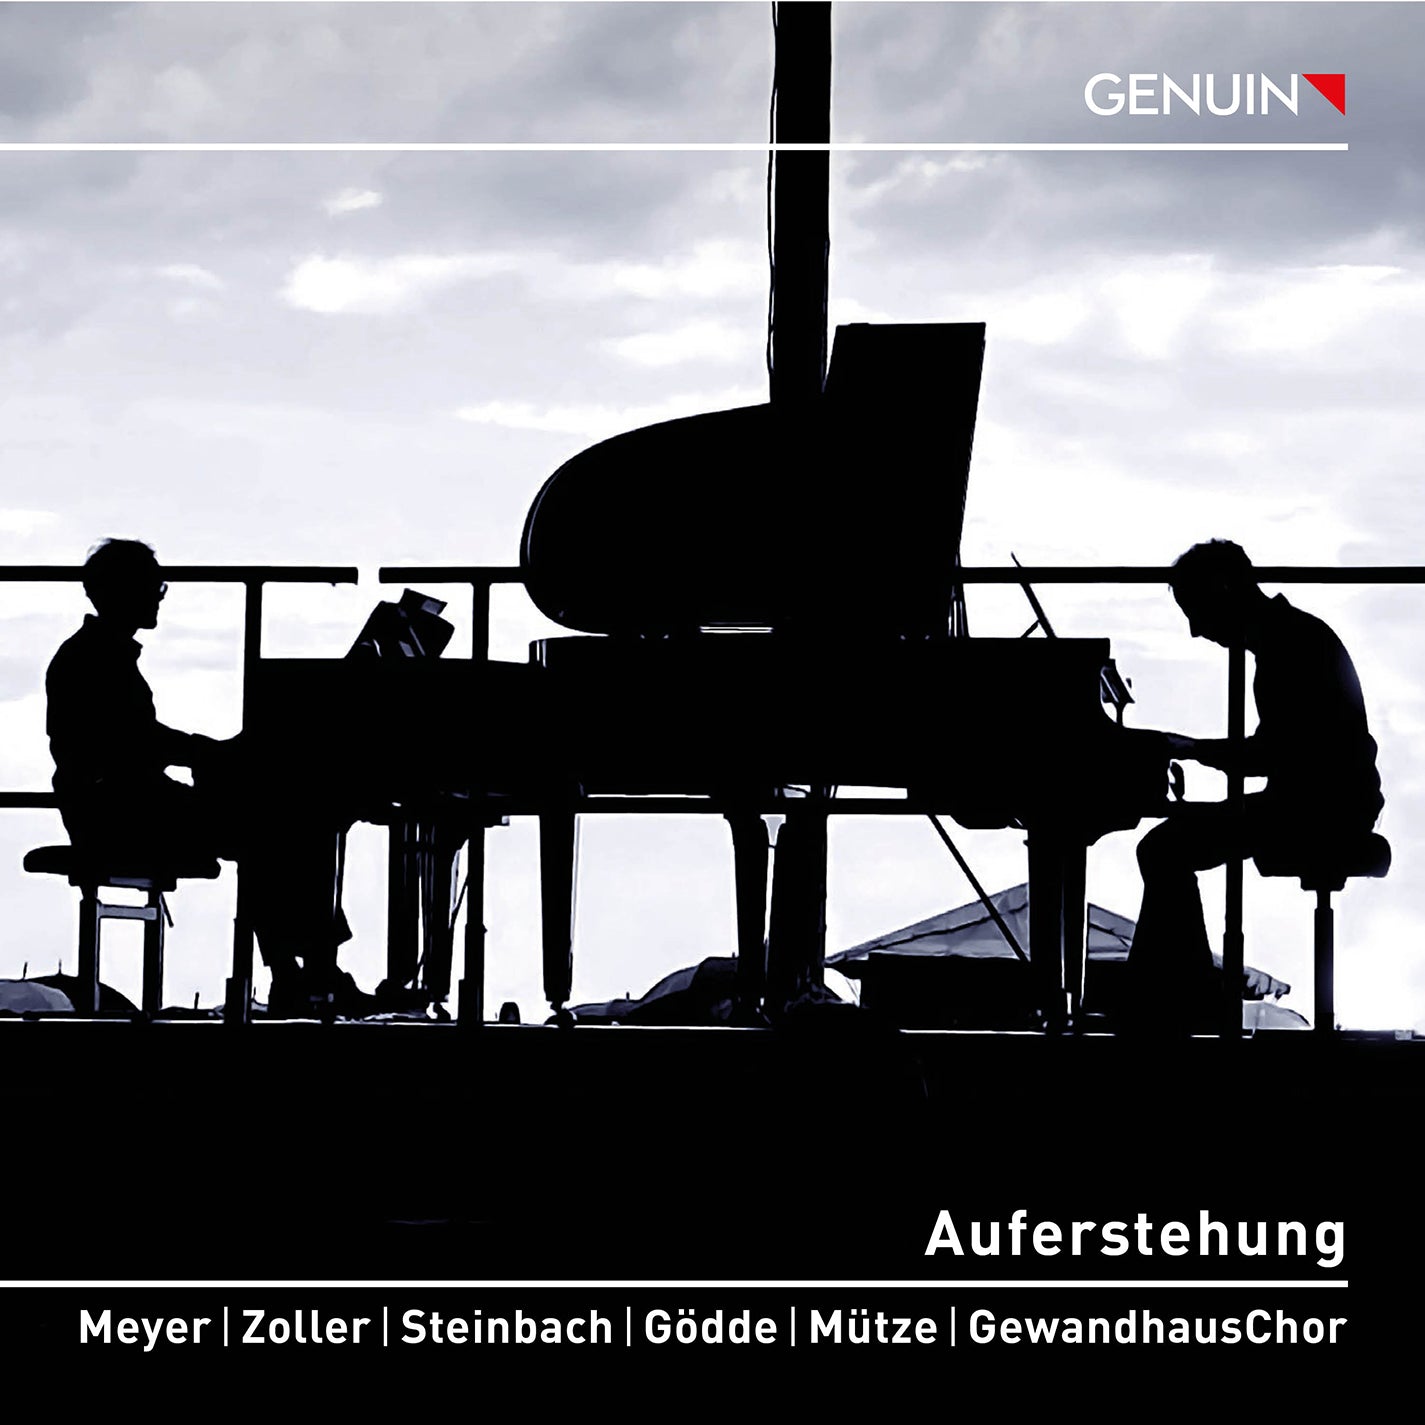 Mahler: Auferstehung - Symphony no. 2 as Chamber Music / Meyer, Zoller et al.